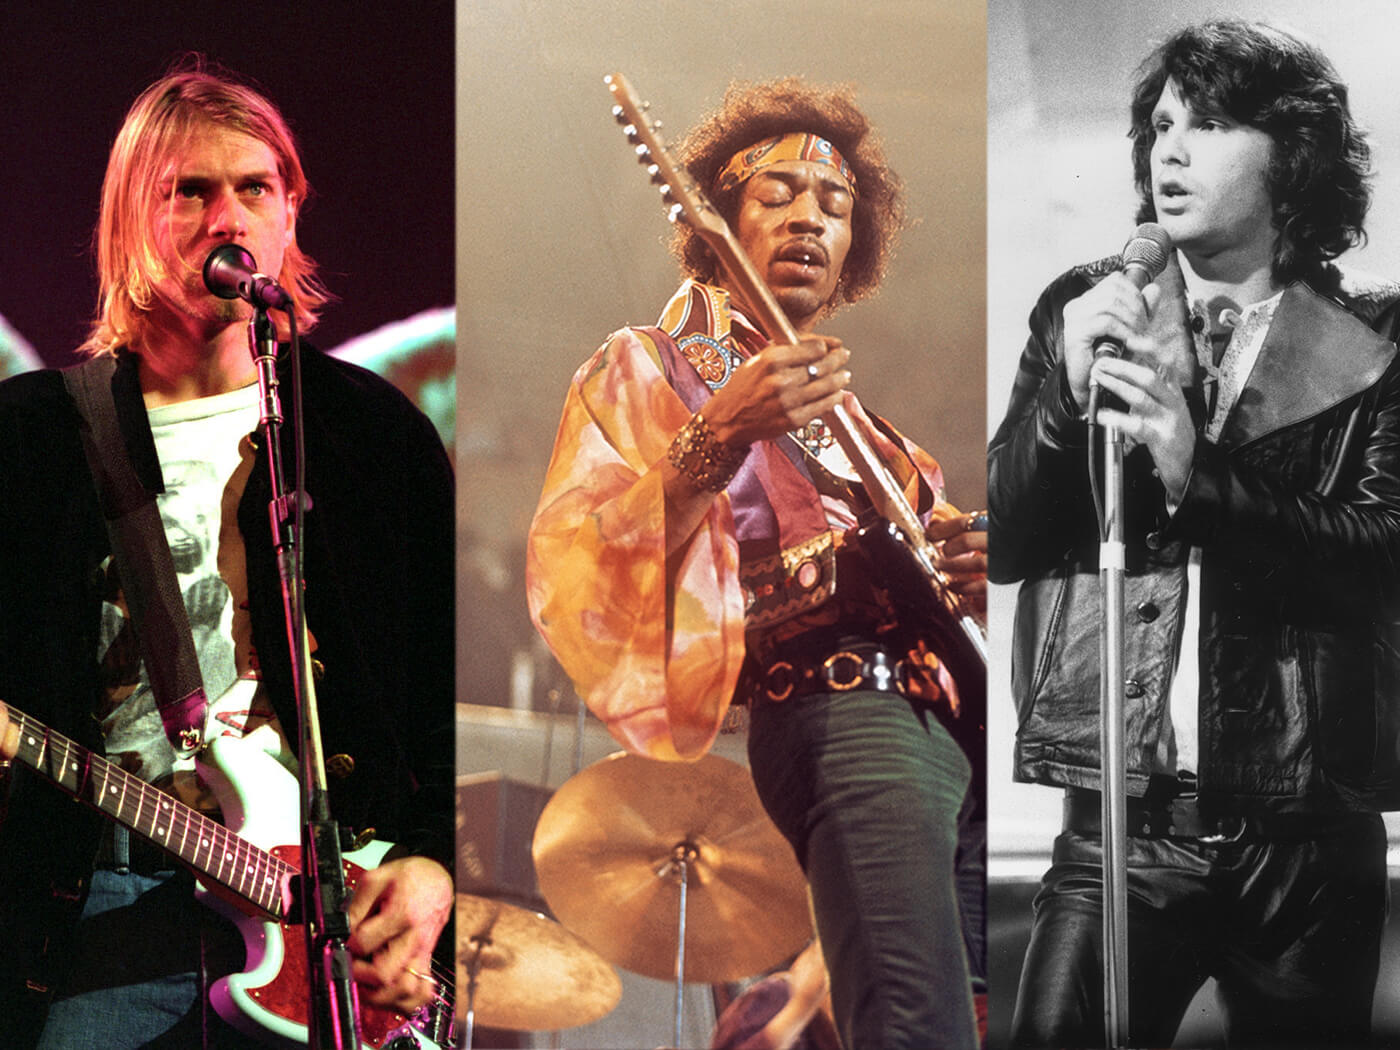 Kurt Cobain, Jimi Hendrix and Jim Morrison